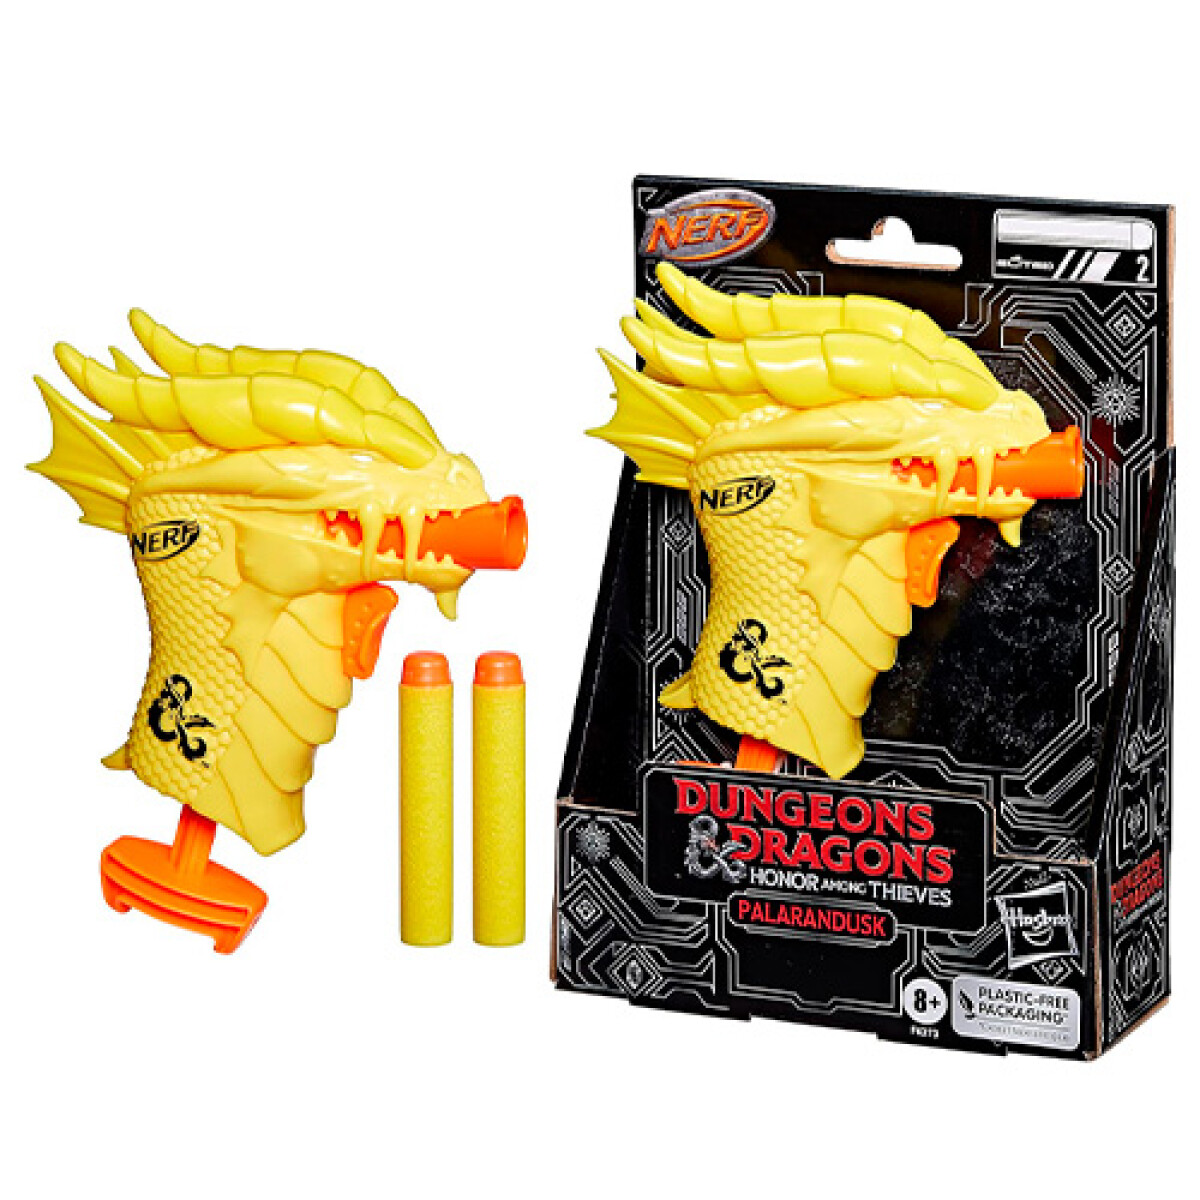 Pistola de Dardos Nerf Microshots Dungeons Dragons - 001 